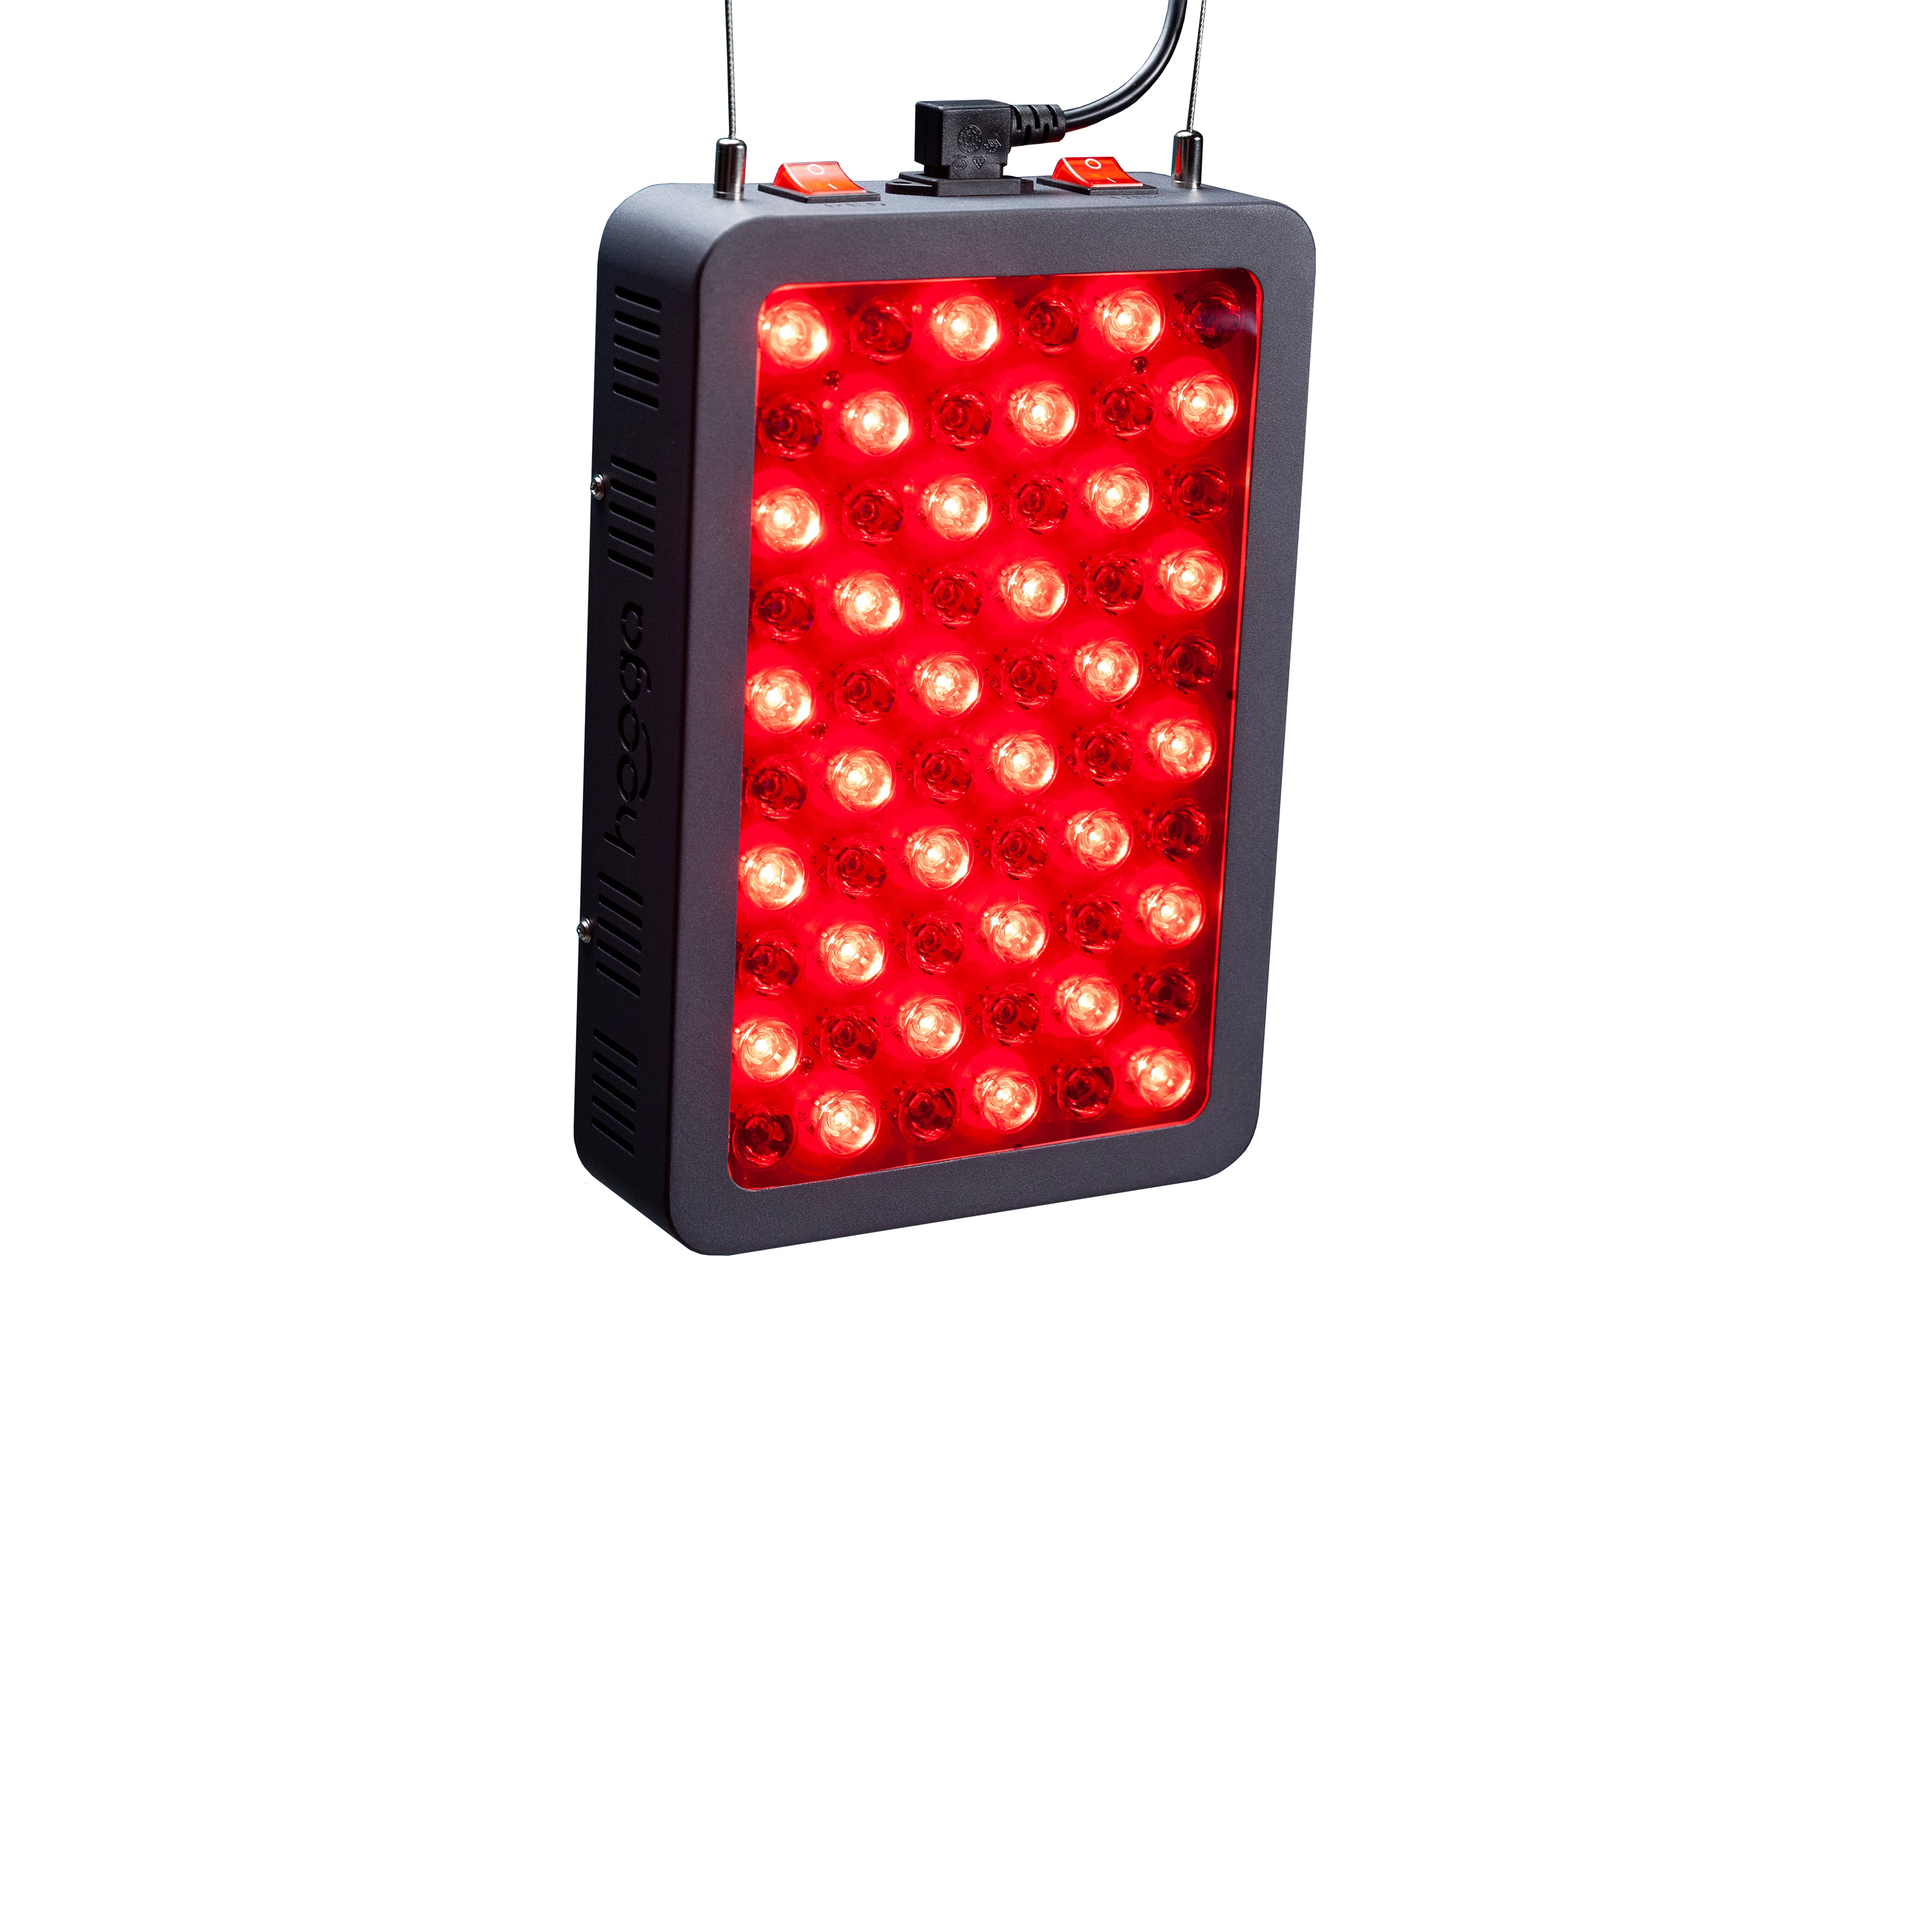 Forbipasserende sikkerhed Formuler Hooga Red Light Therapy Device HG300